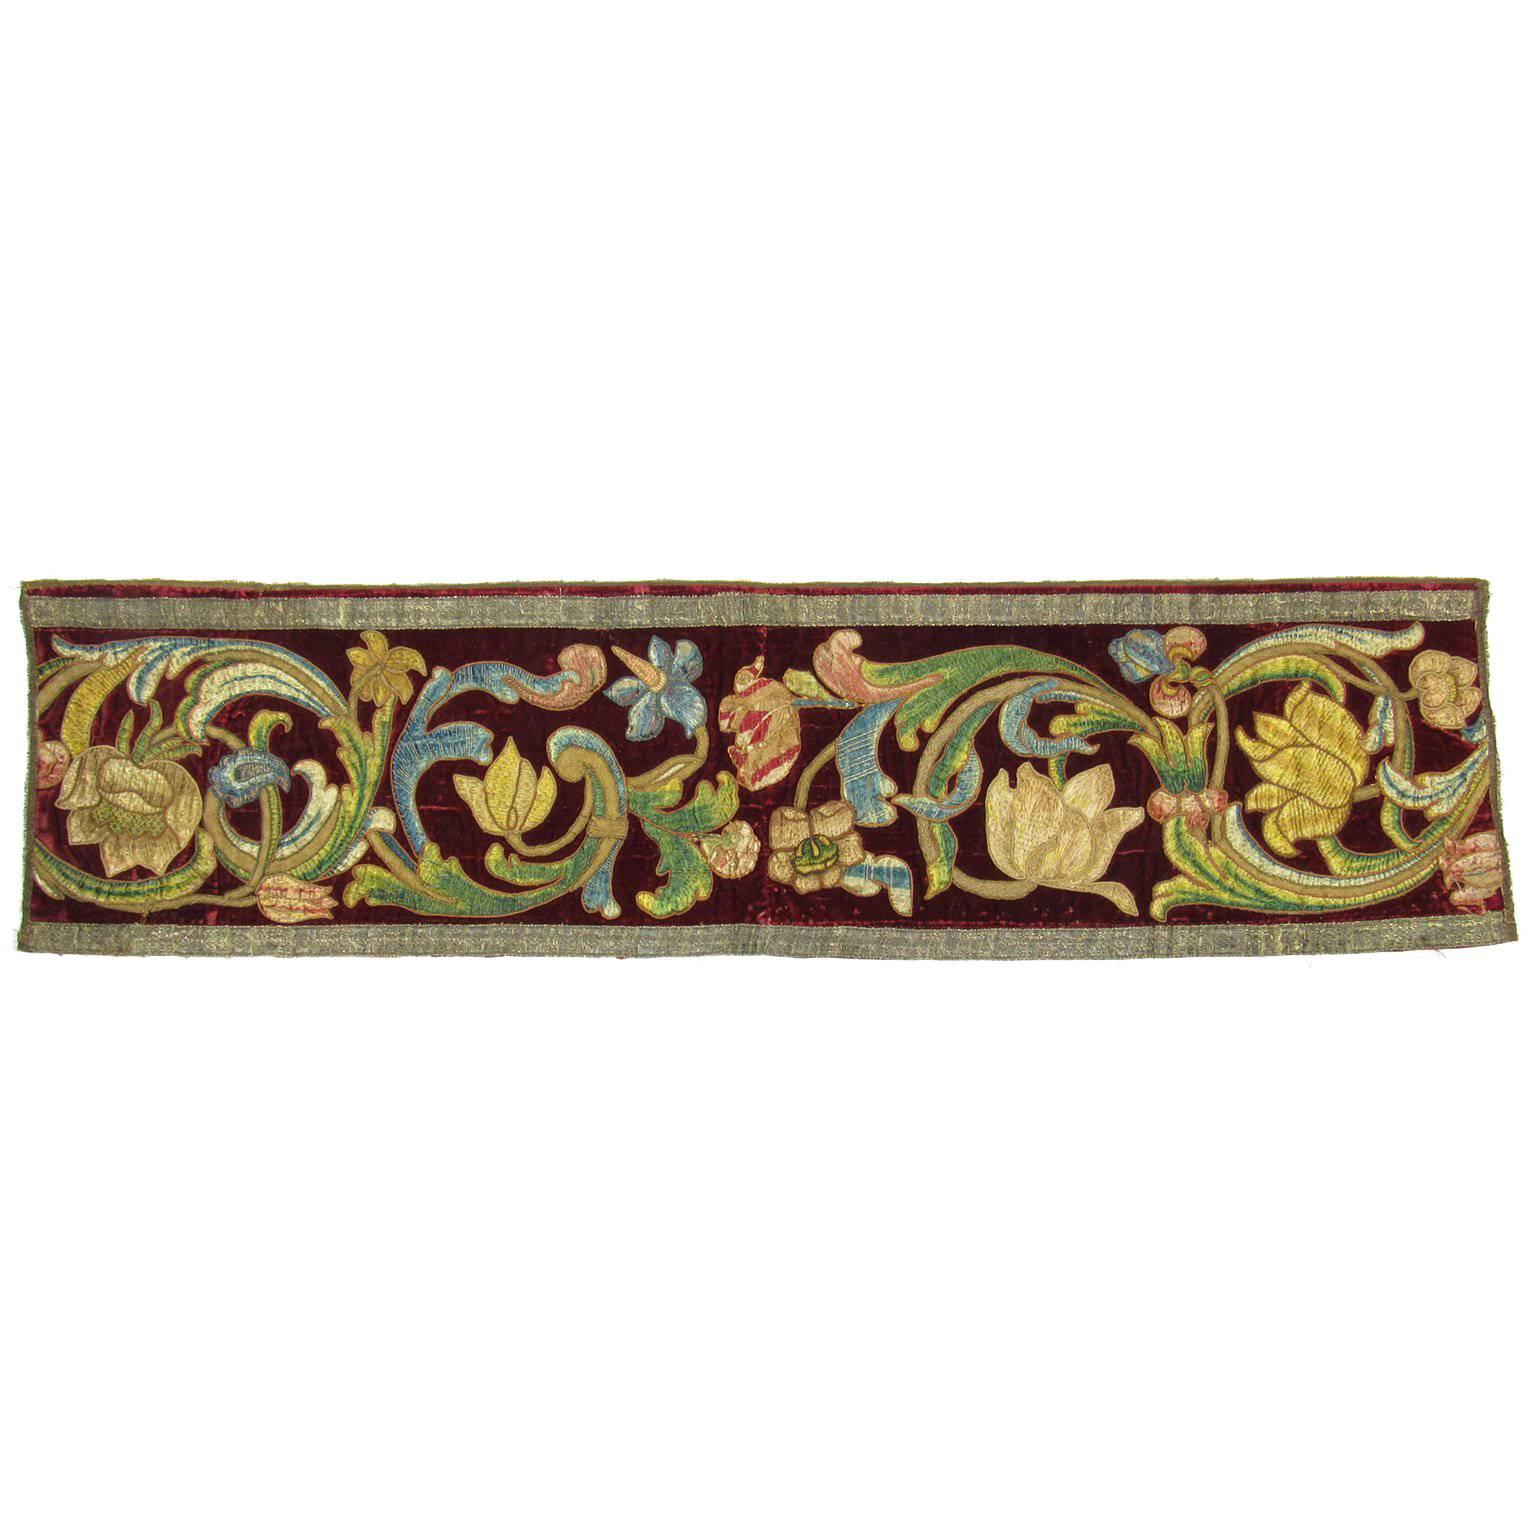 Antique Continental Renaissance Style Floral Embroidered Textile For Sale